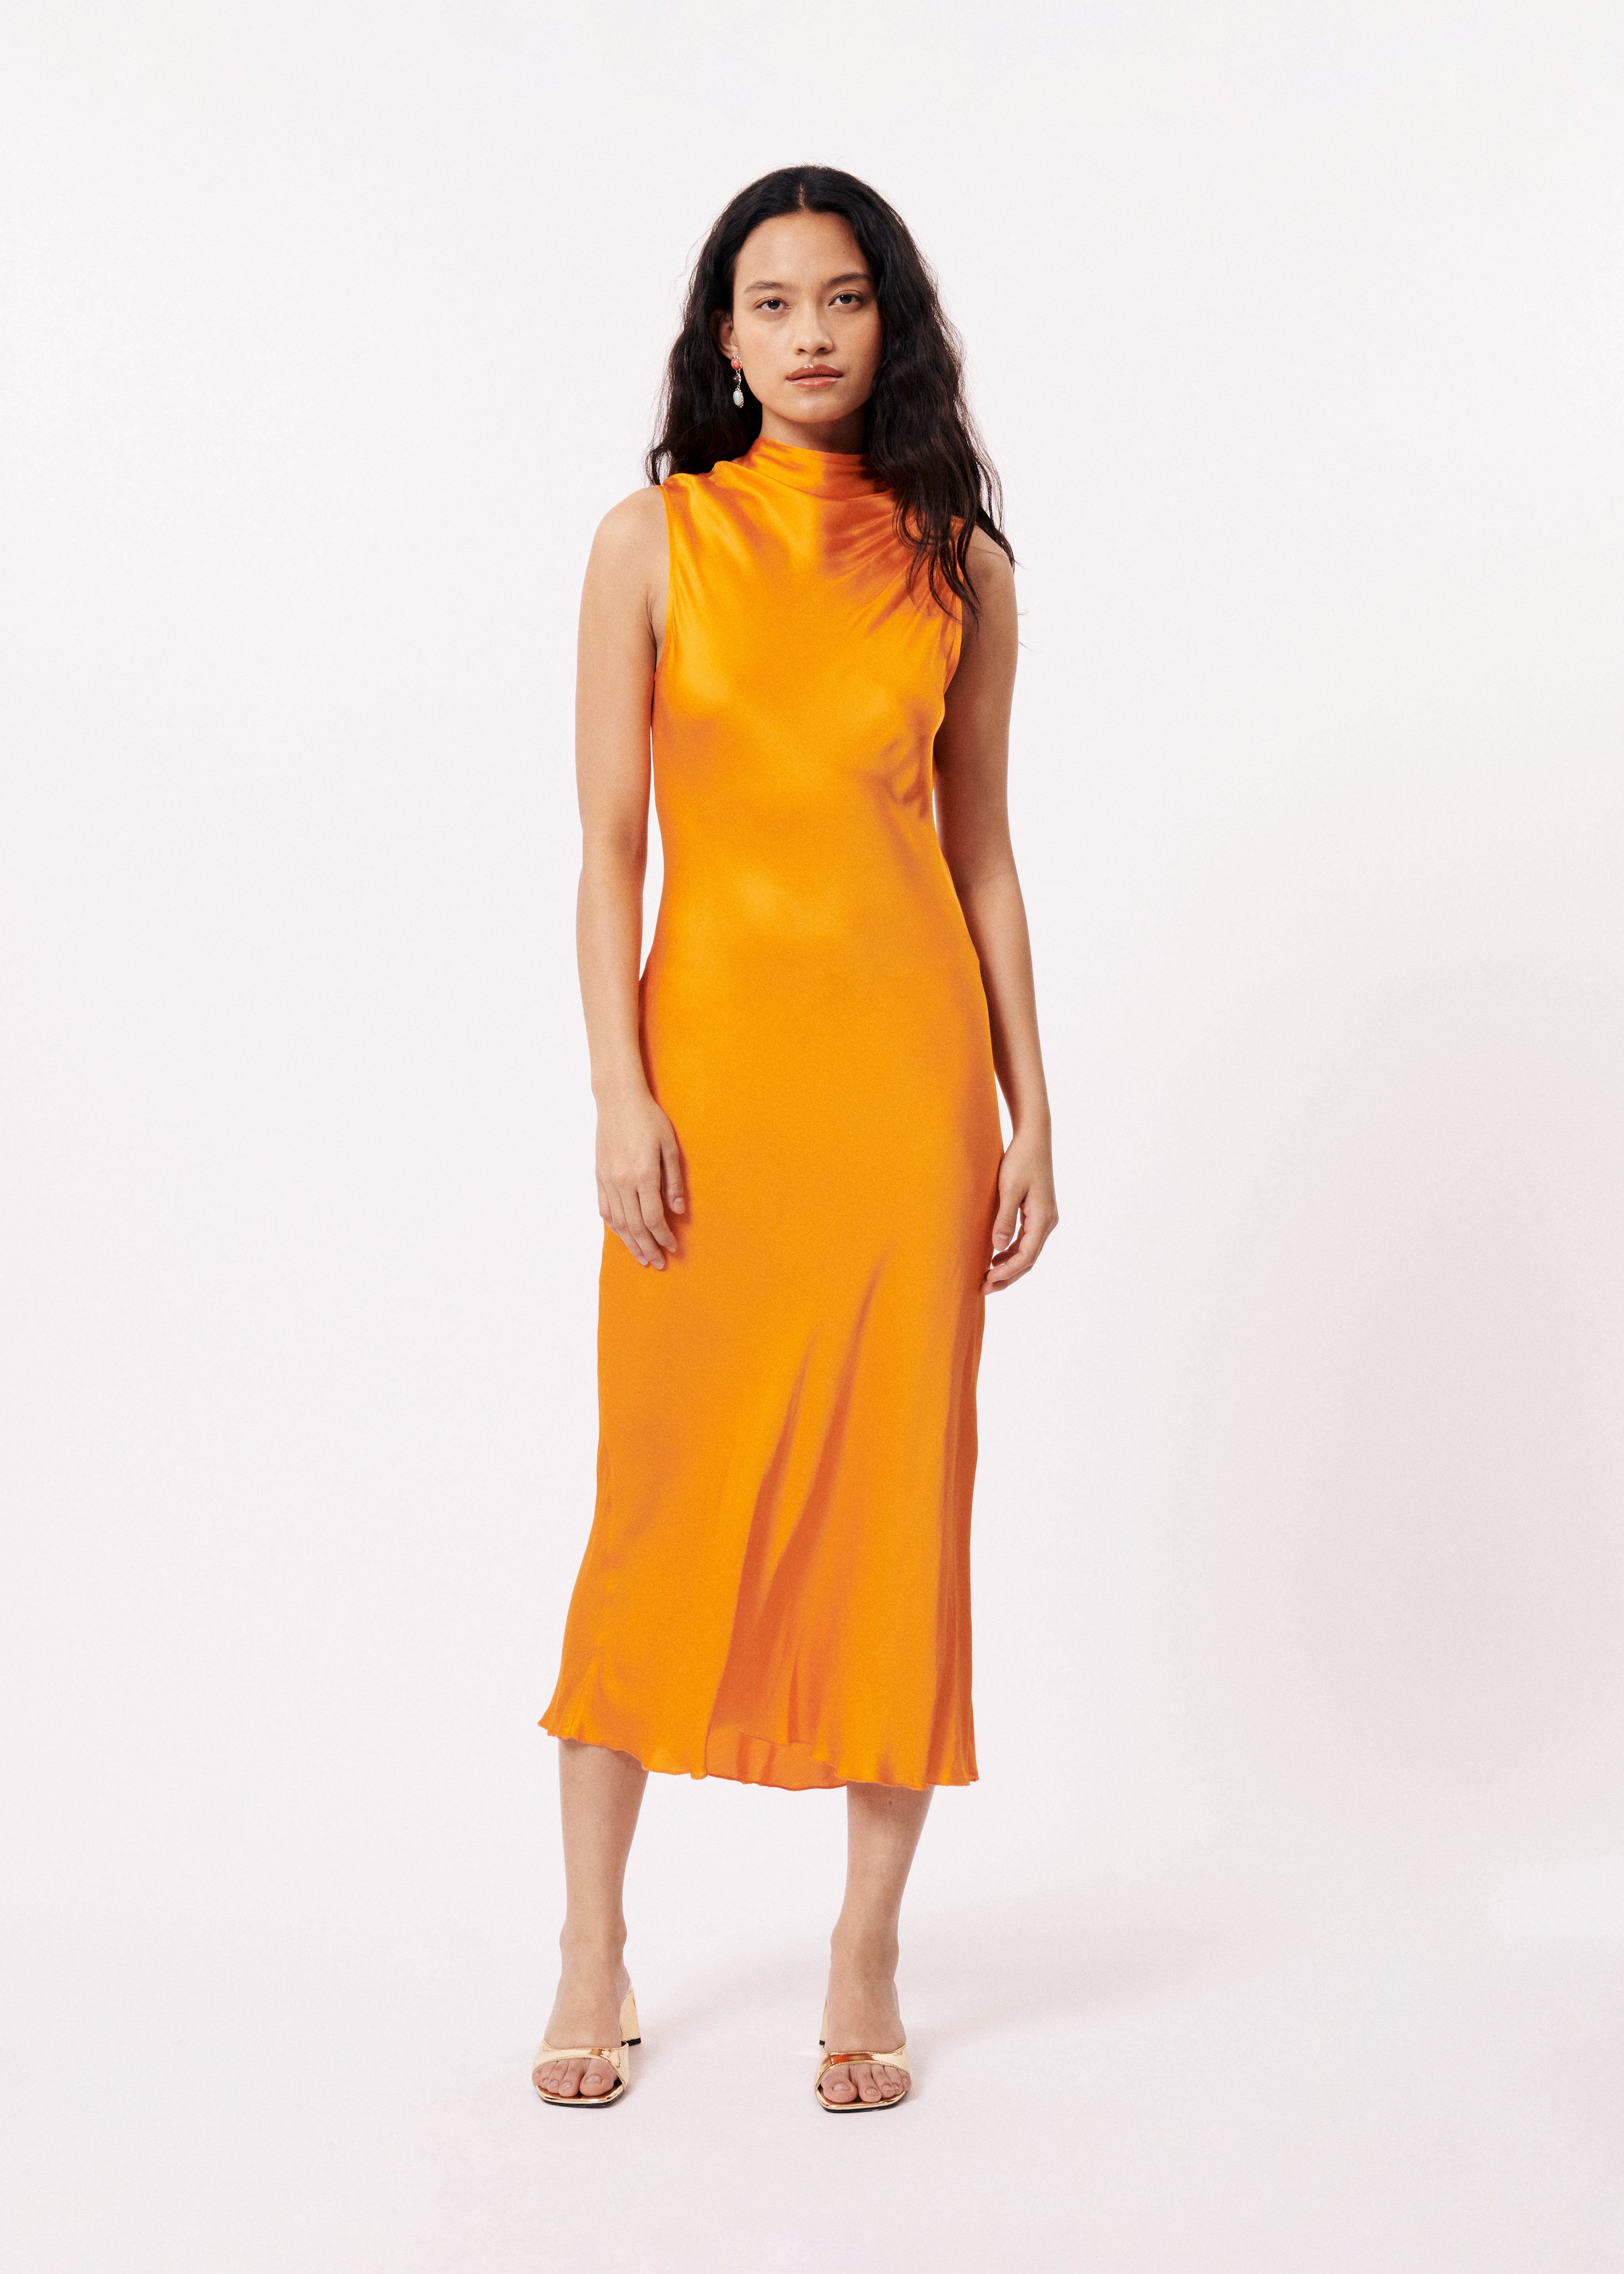 ARTEMIS Orange Dress